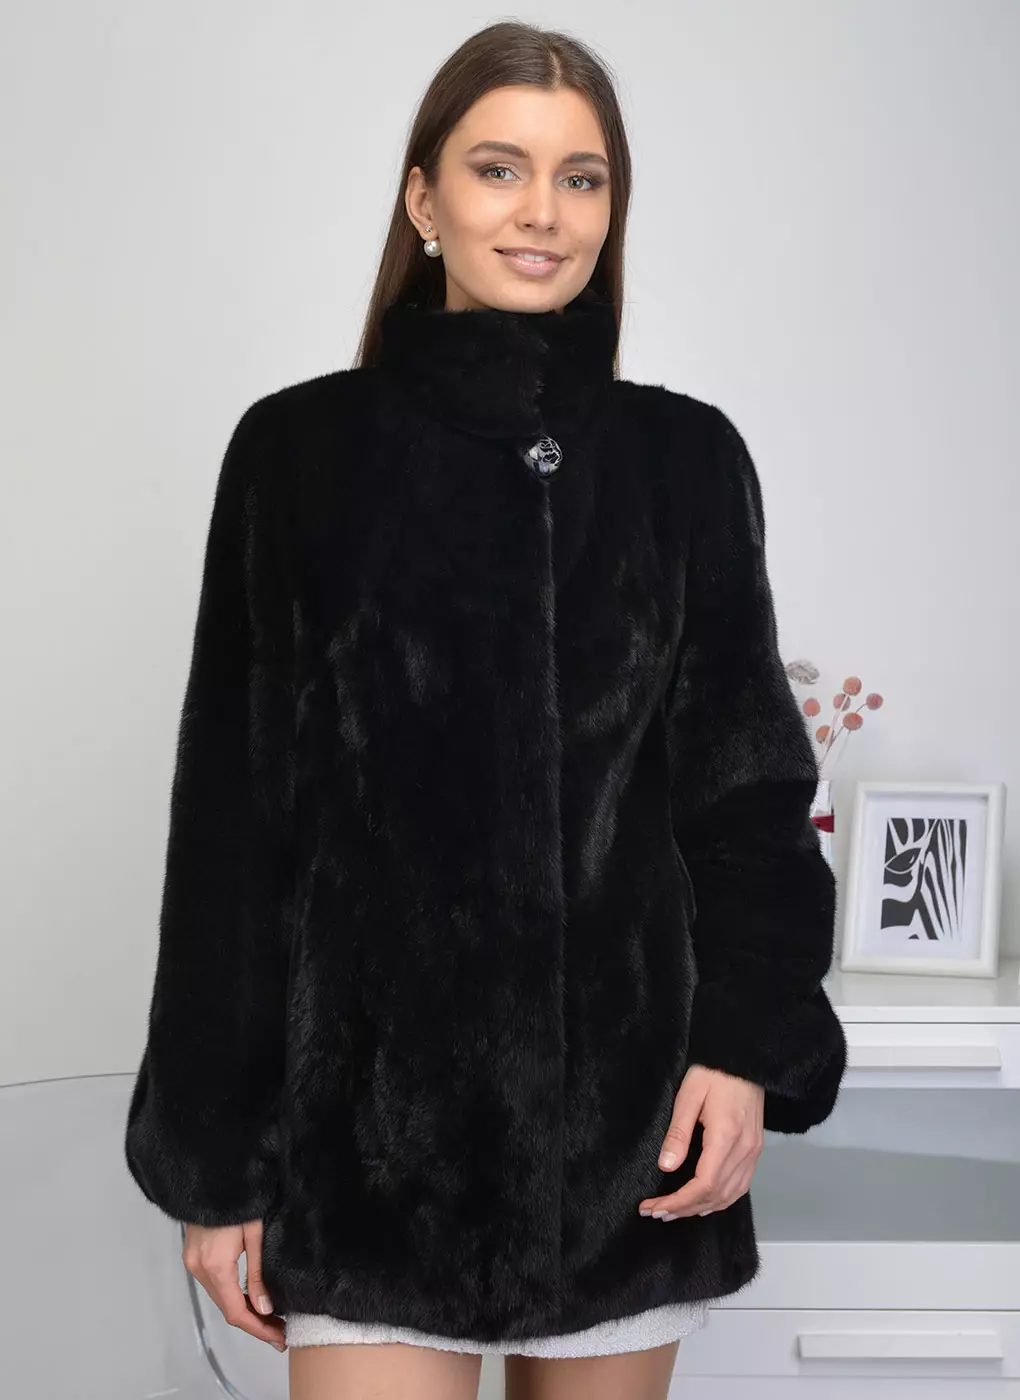 Mermeriny Fur Coats (37 foto): Recensione di modelli eleganti del marchio 325_32